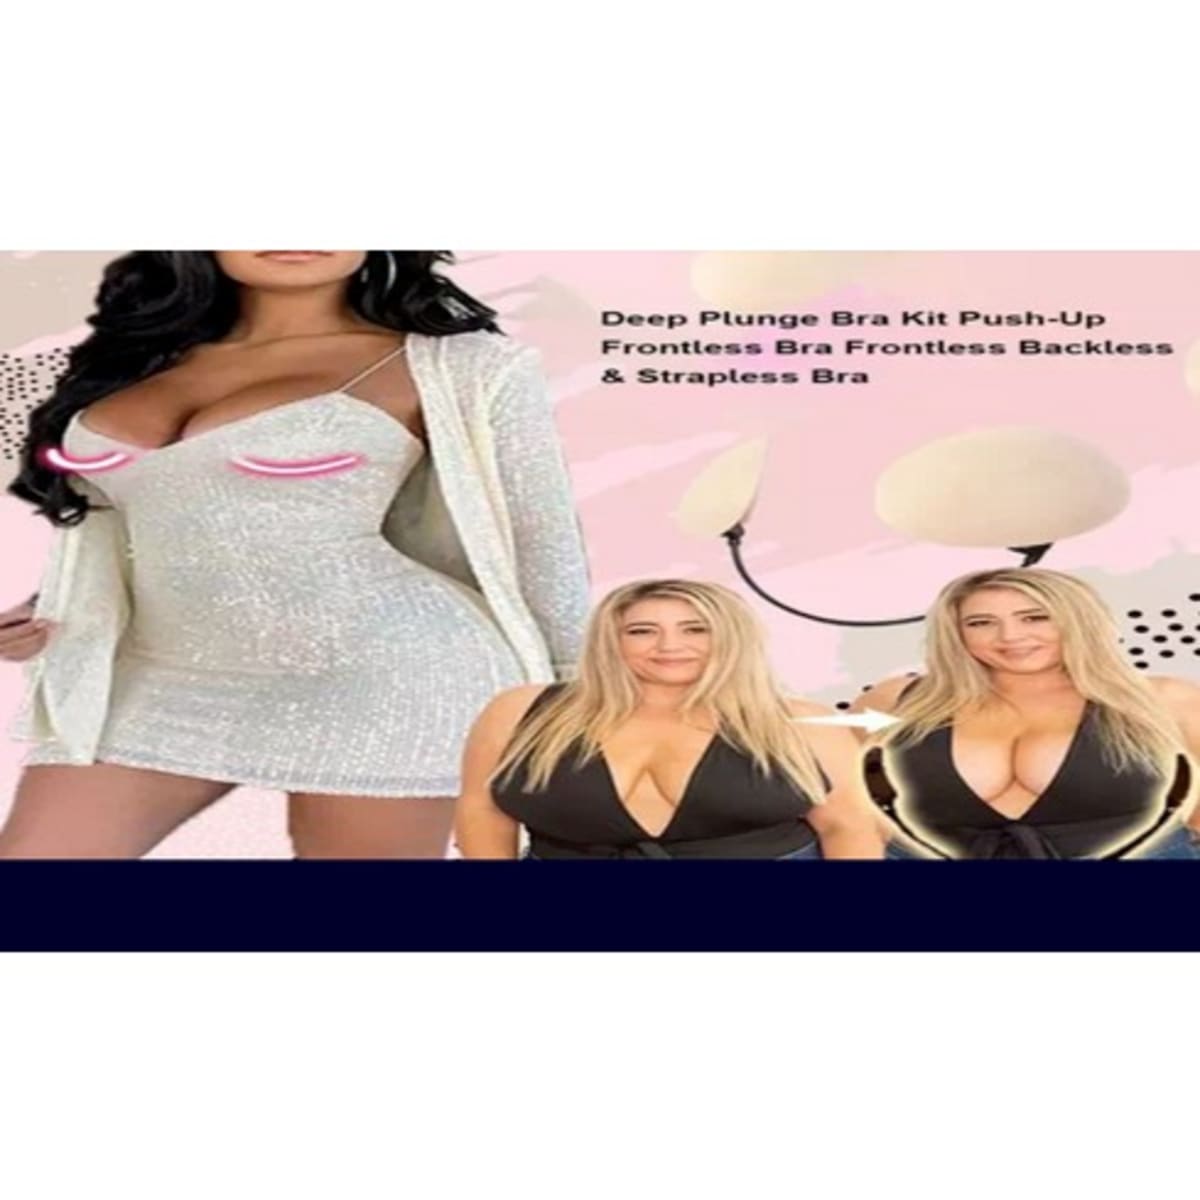 Buy Women Deep Push-up Frontless Bra Kit Frontless Backless